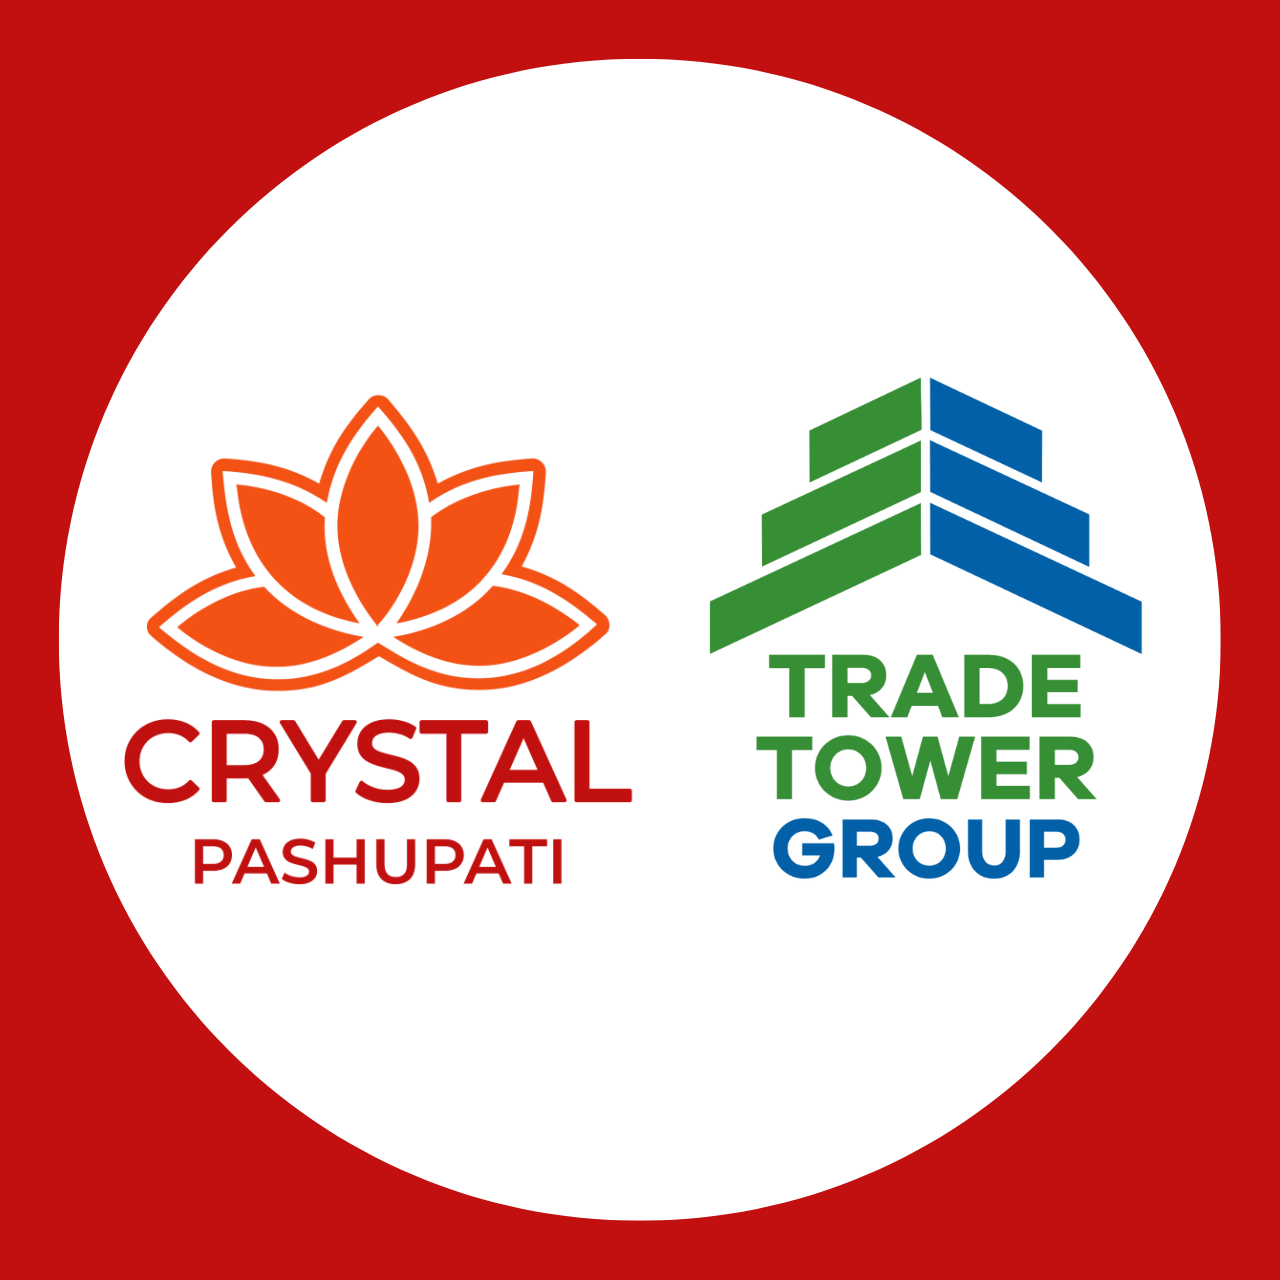 Hotel Crystal Pashupati (Trade Tower Group)